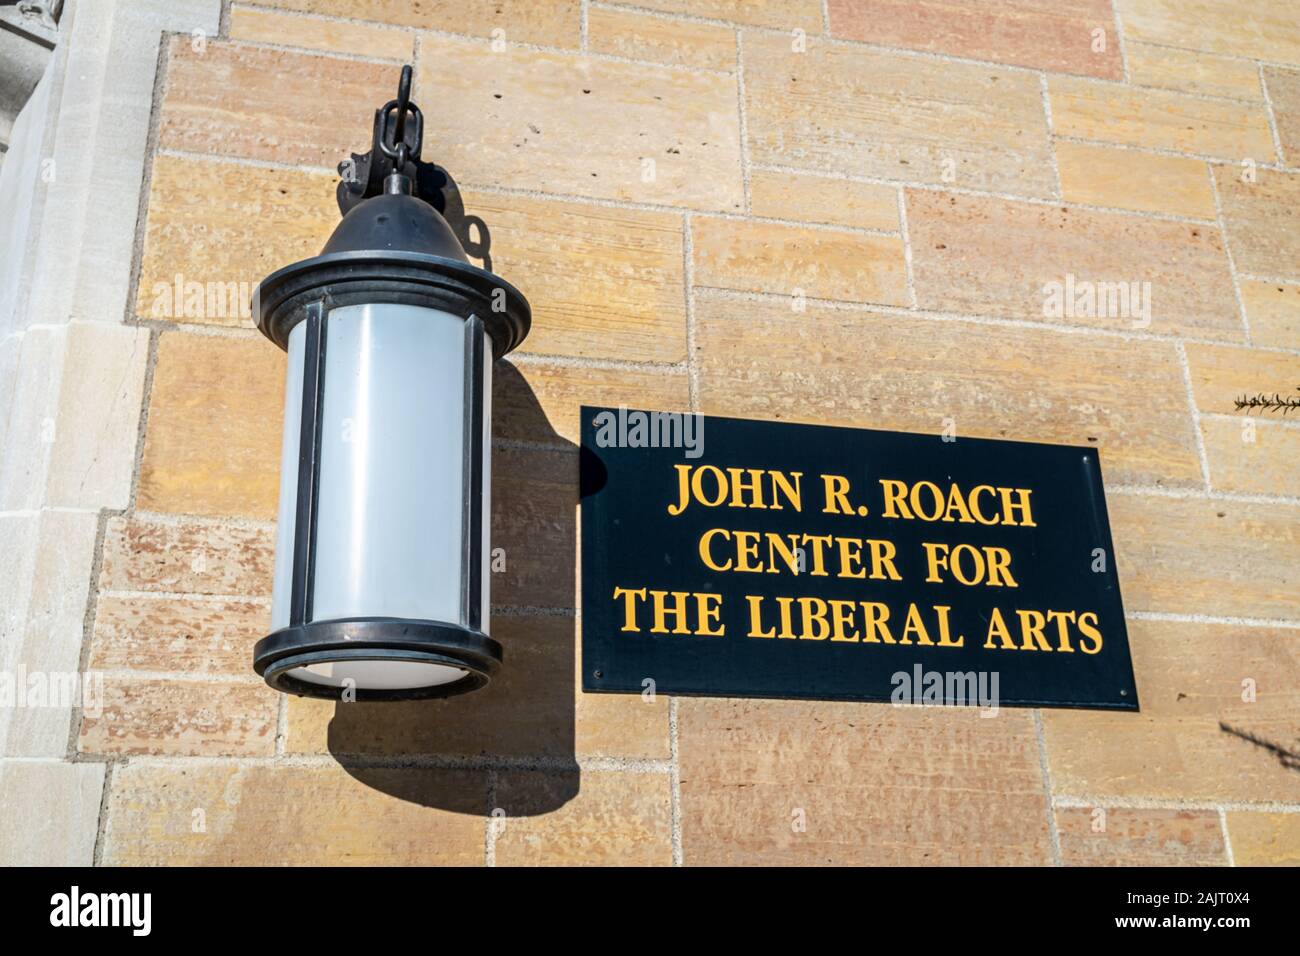 ST. PAUL, MN/USA - JANUARY 4, 2020: John R. Roach Center for Liberal Arts at University of St. Thomas. Stock Photo